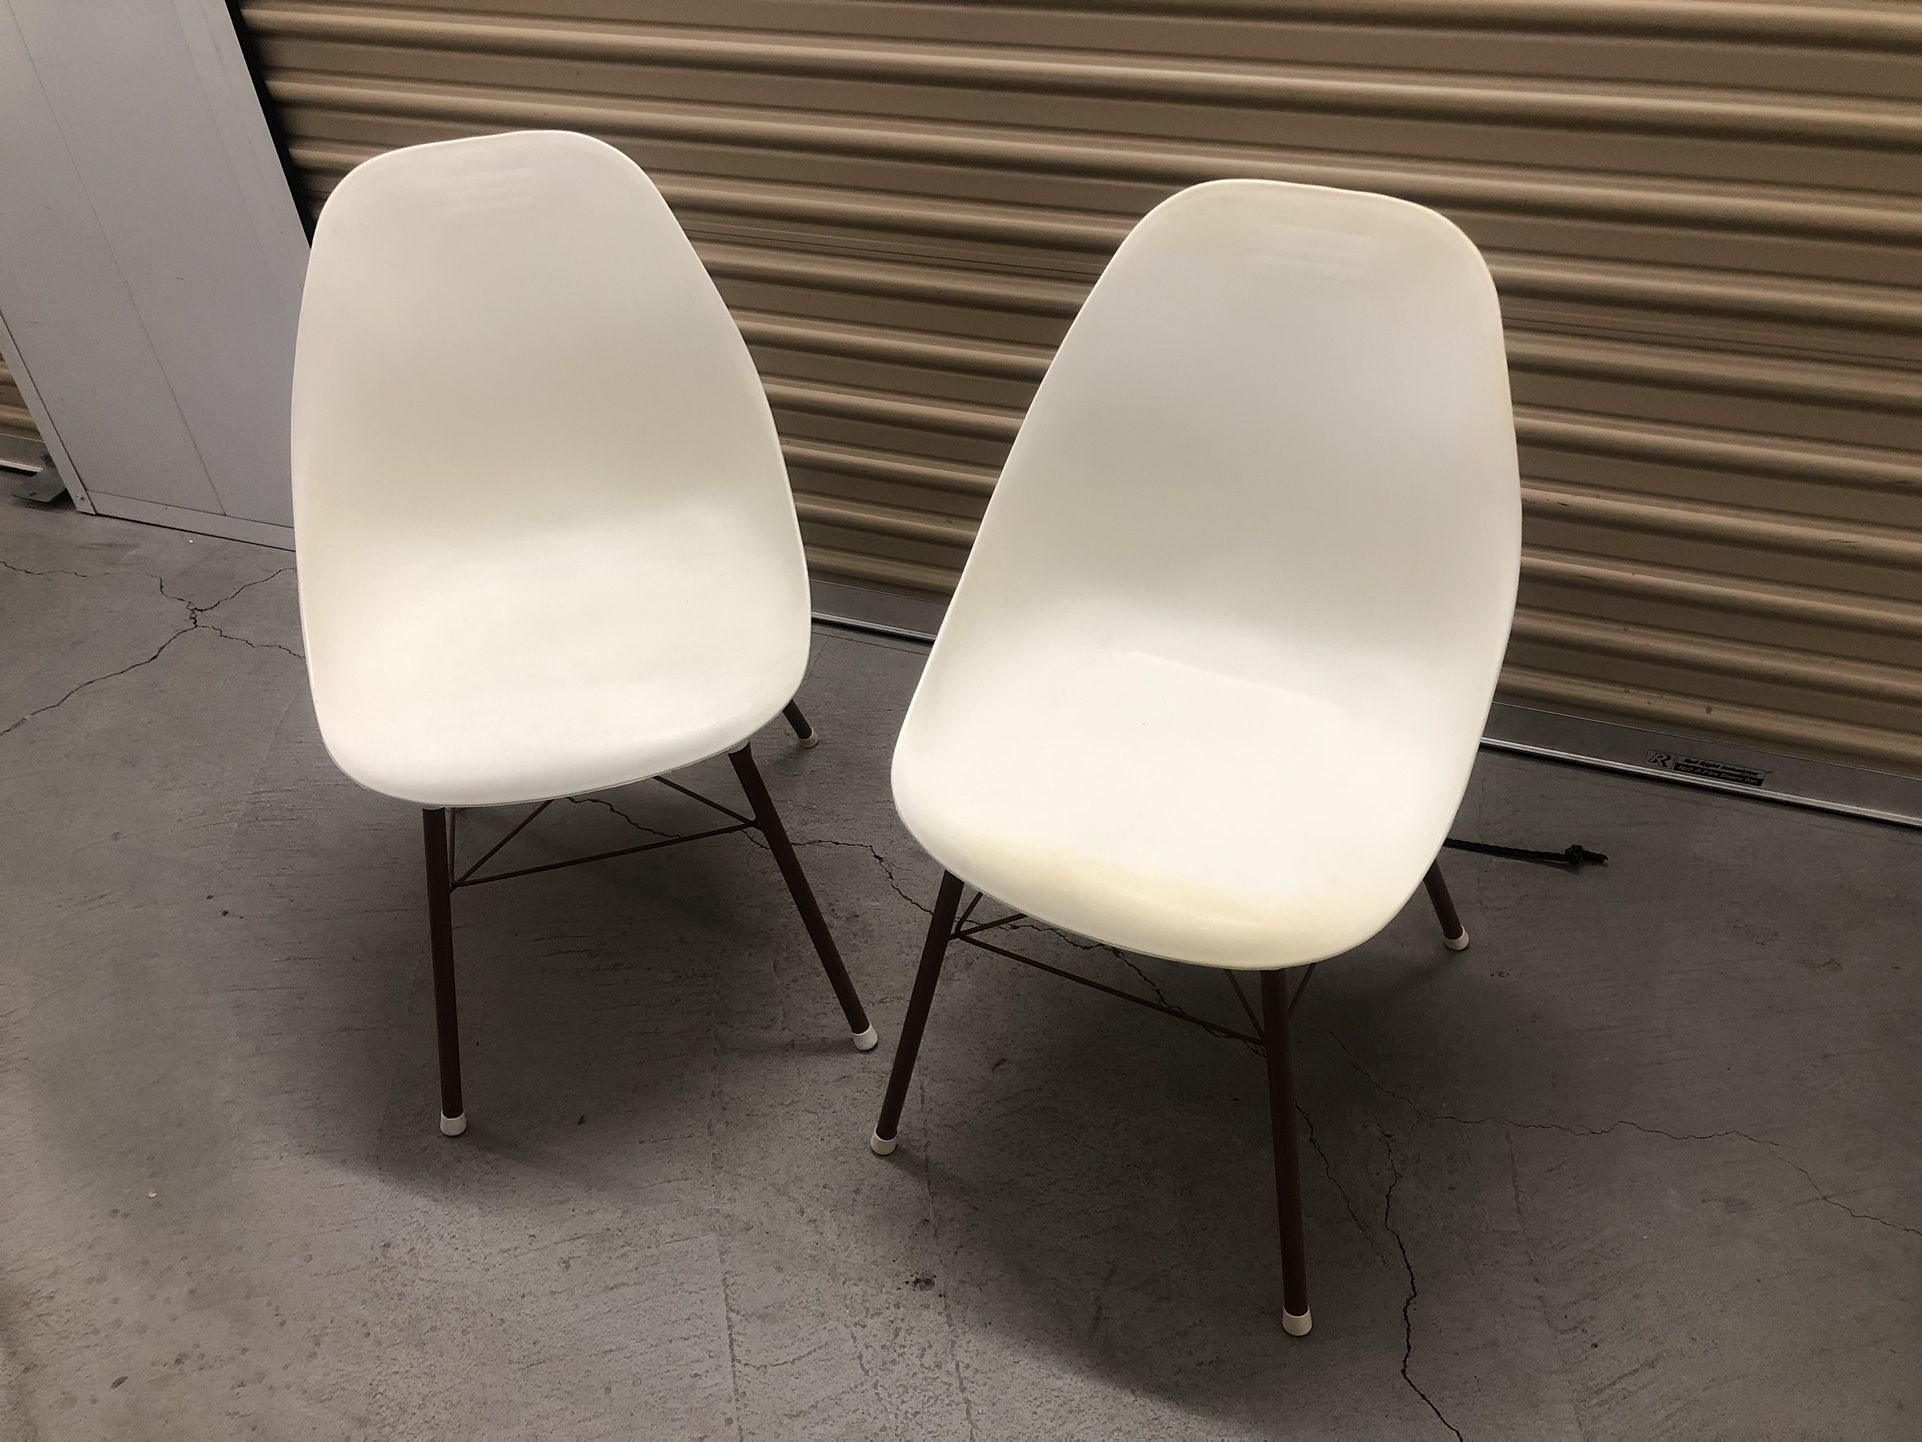 Mid-century, modern chairs